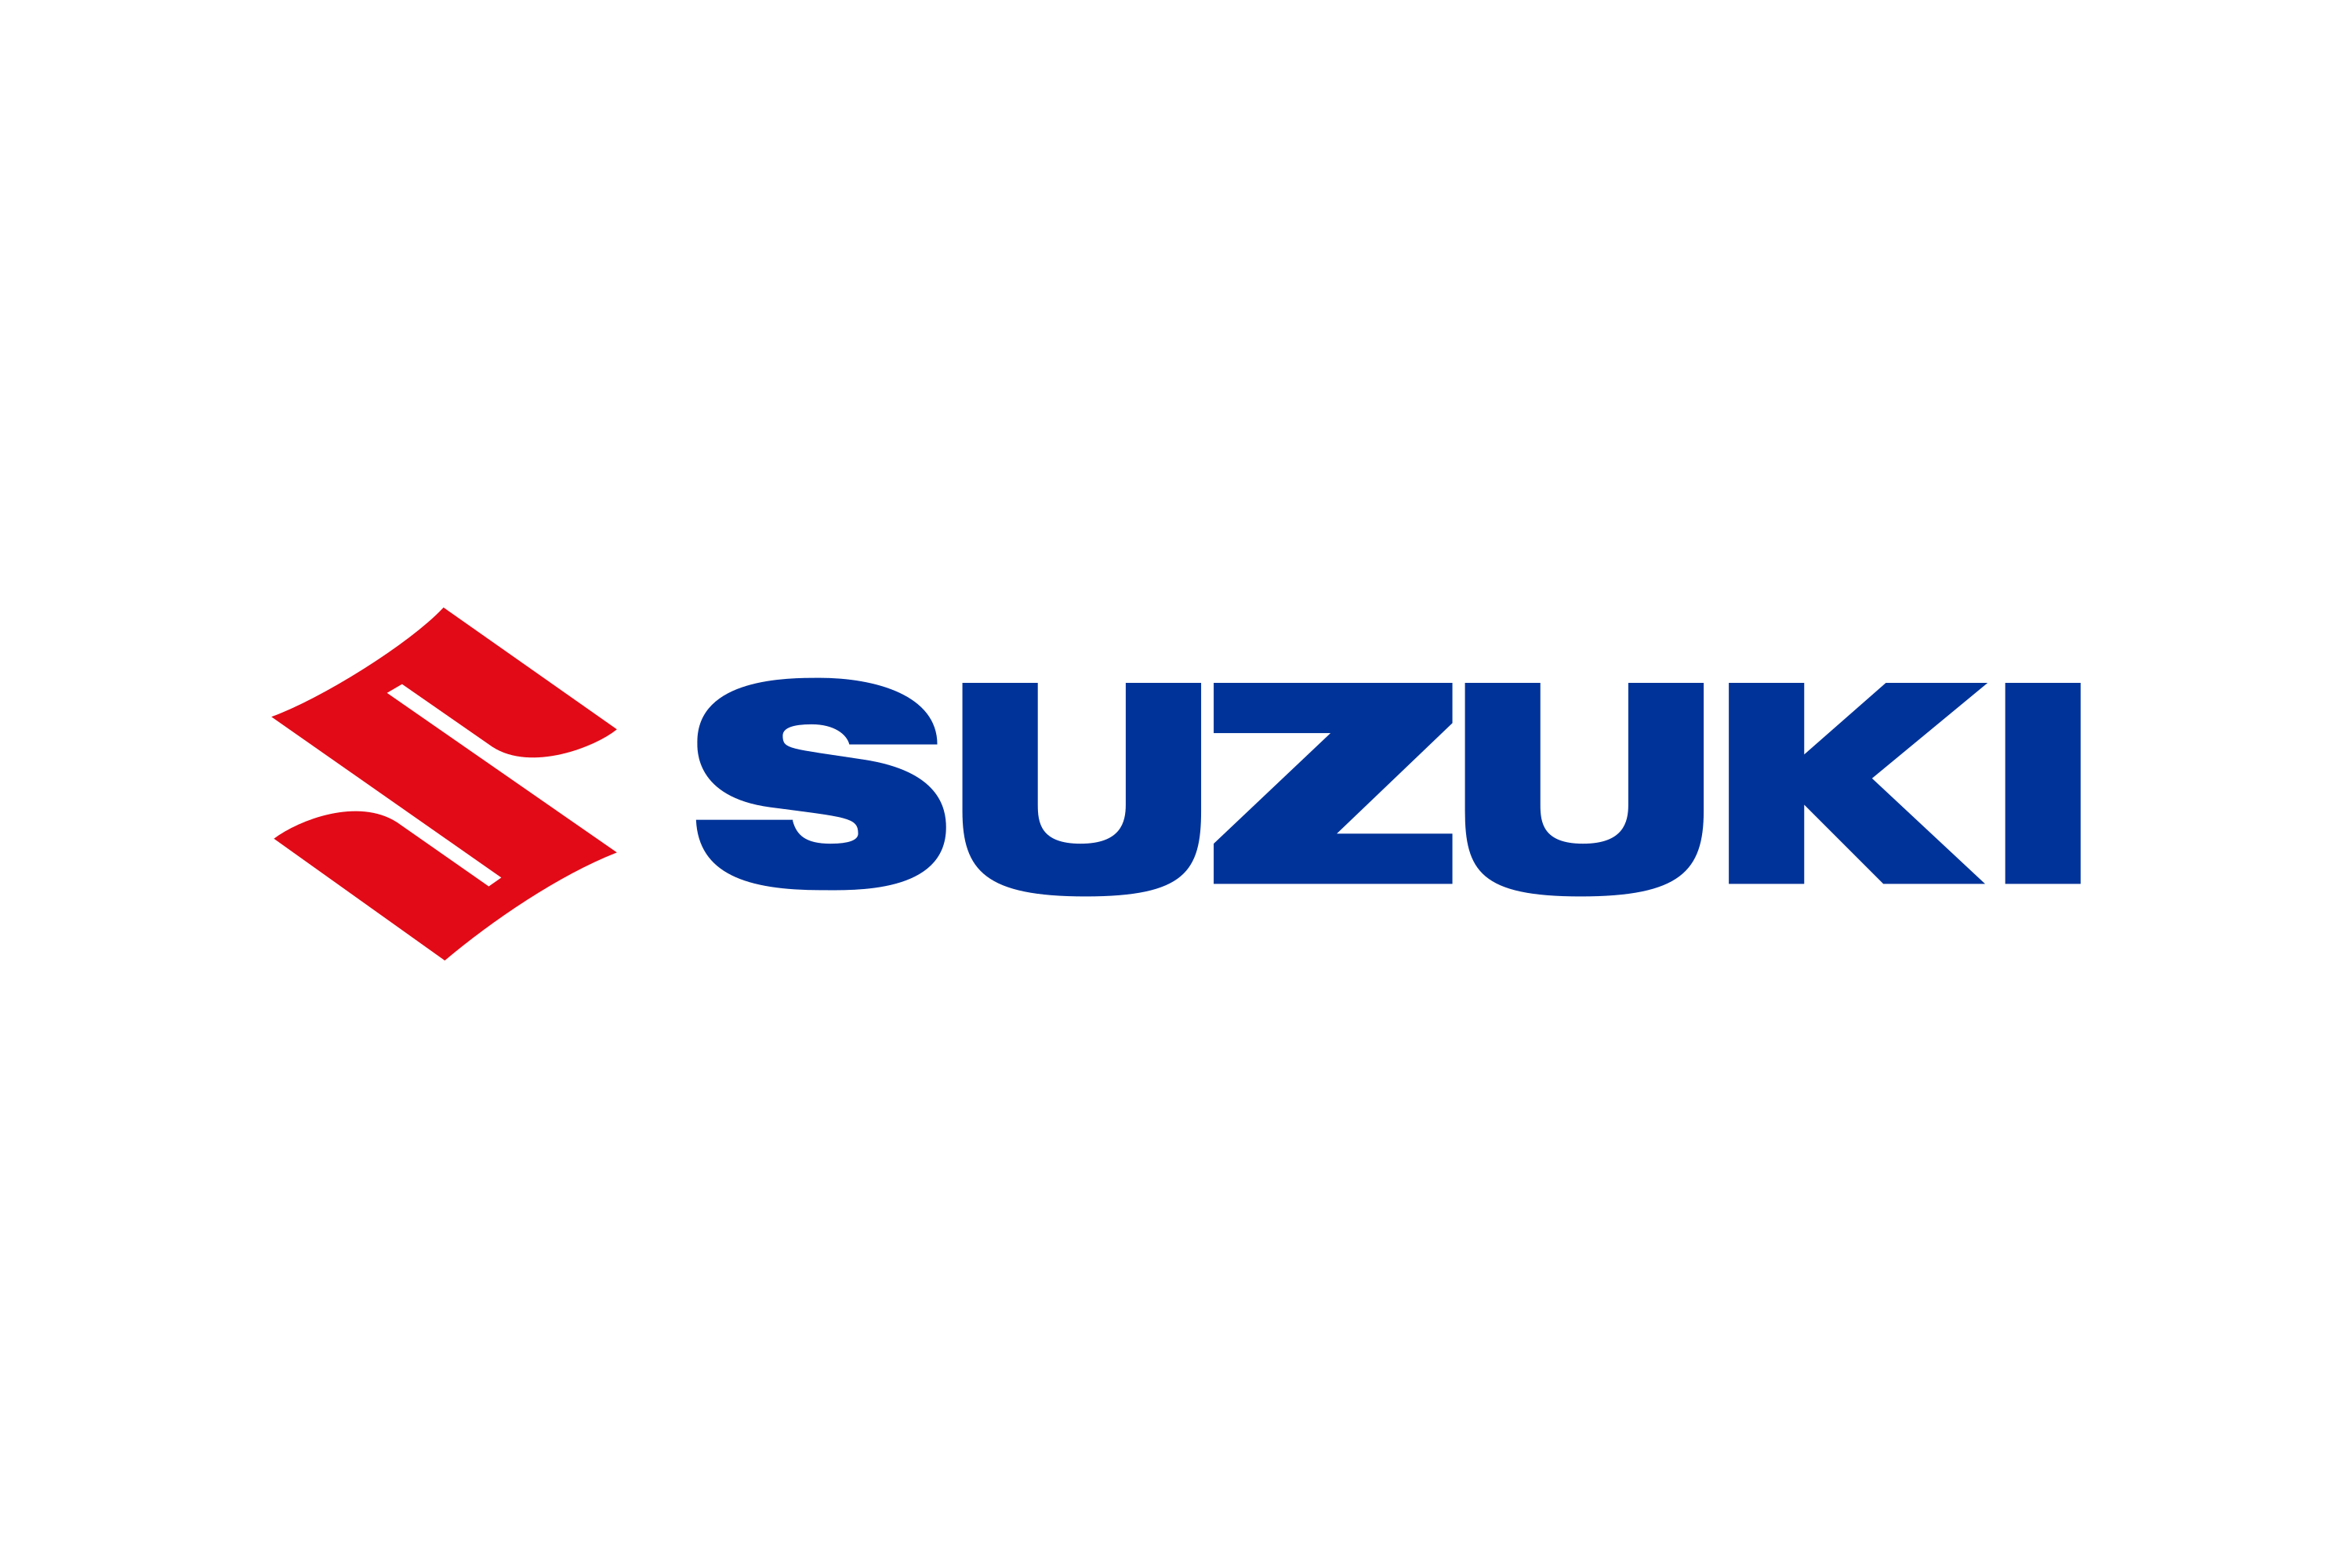 Download Suzuki Logo In Svg Vector Or Png File Format   Logo.wine - Suzuki, Transparent background PNG HD thumbnail